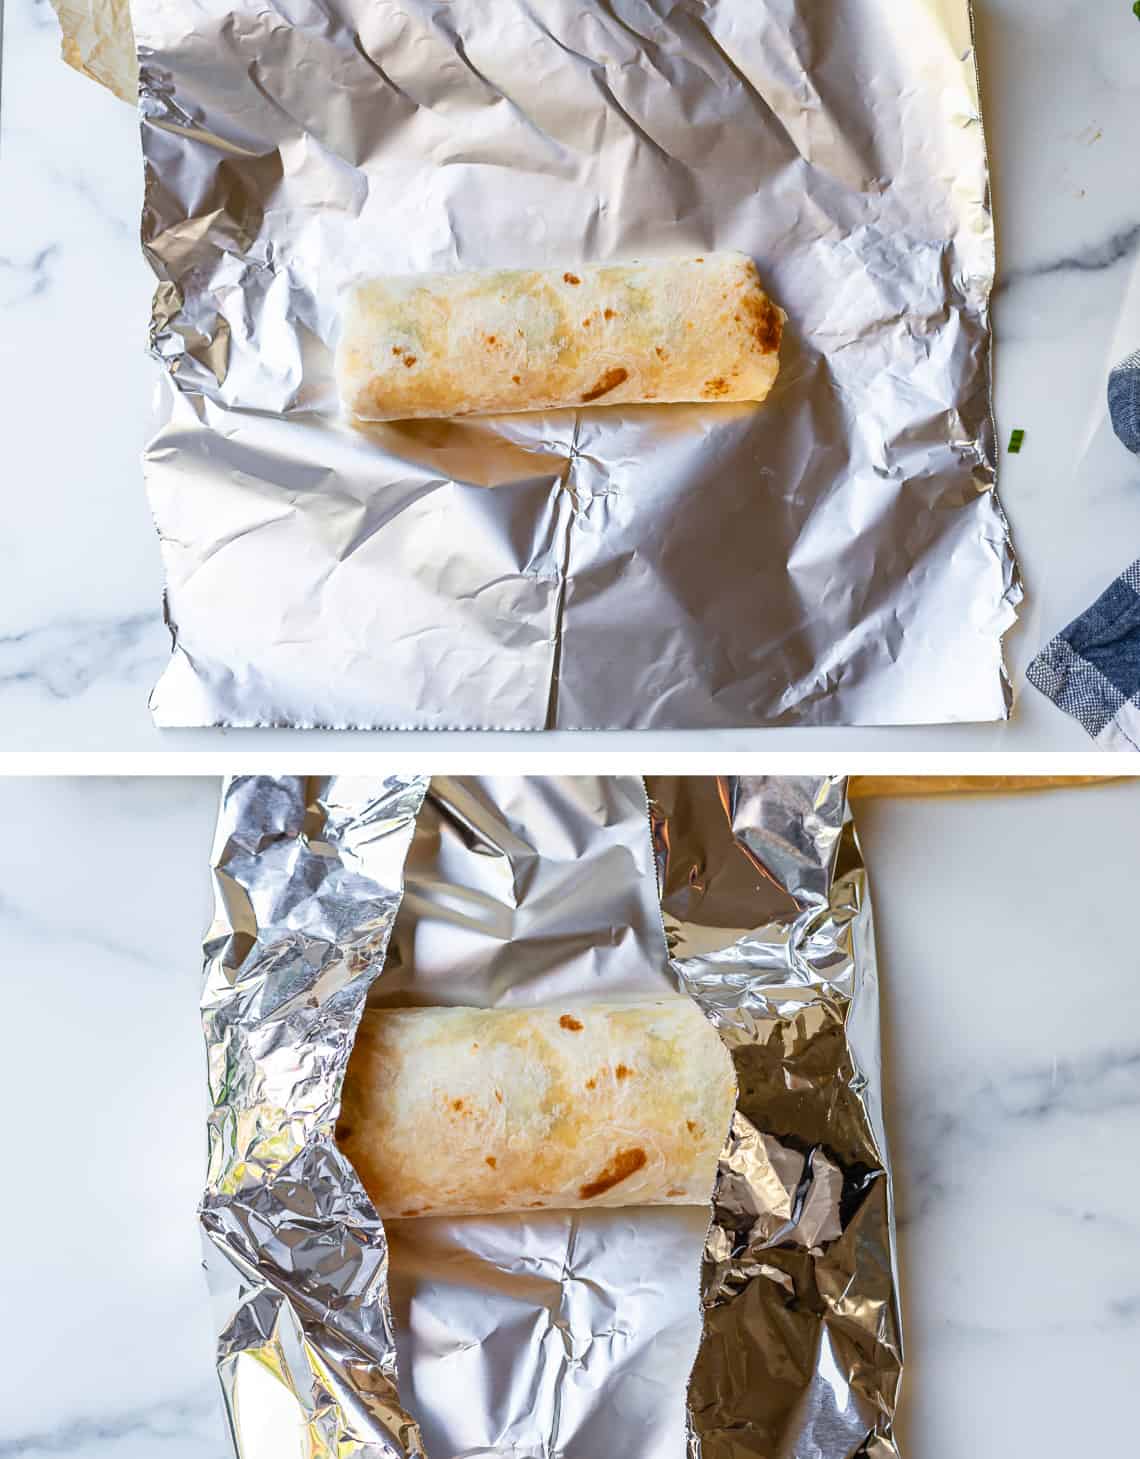 Folding a burrito in aluminum foil